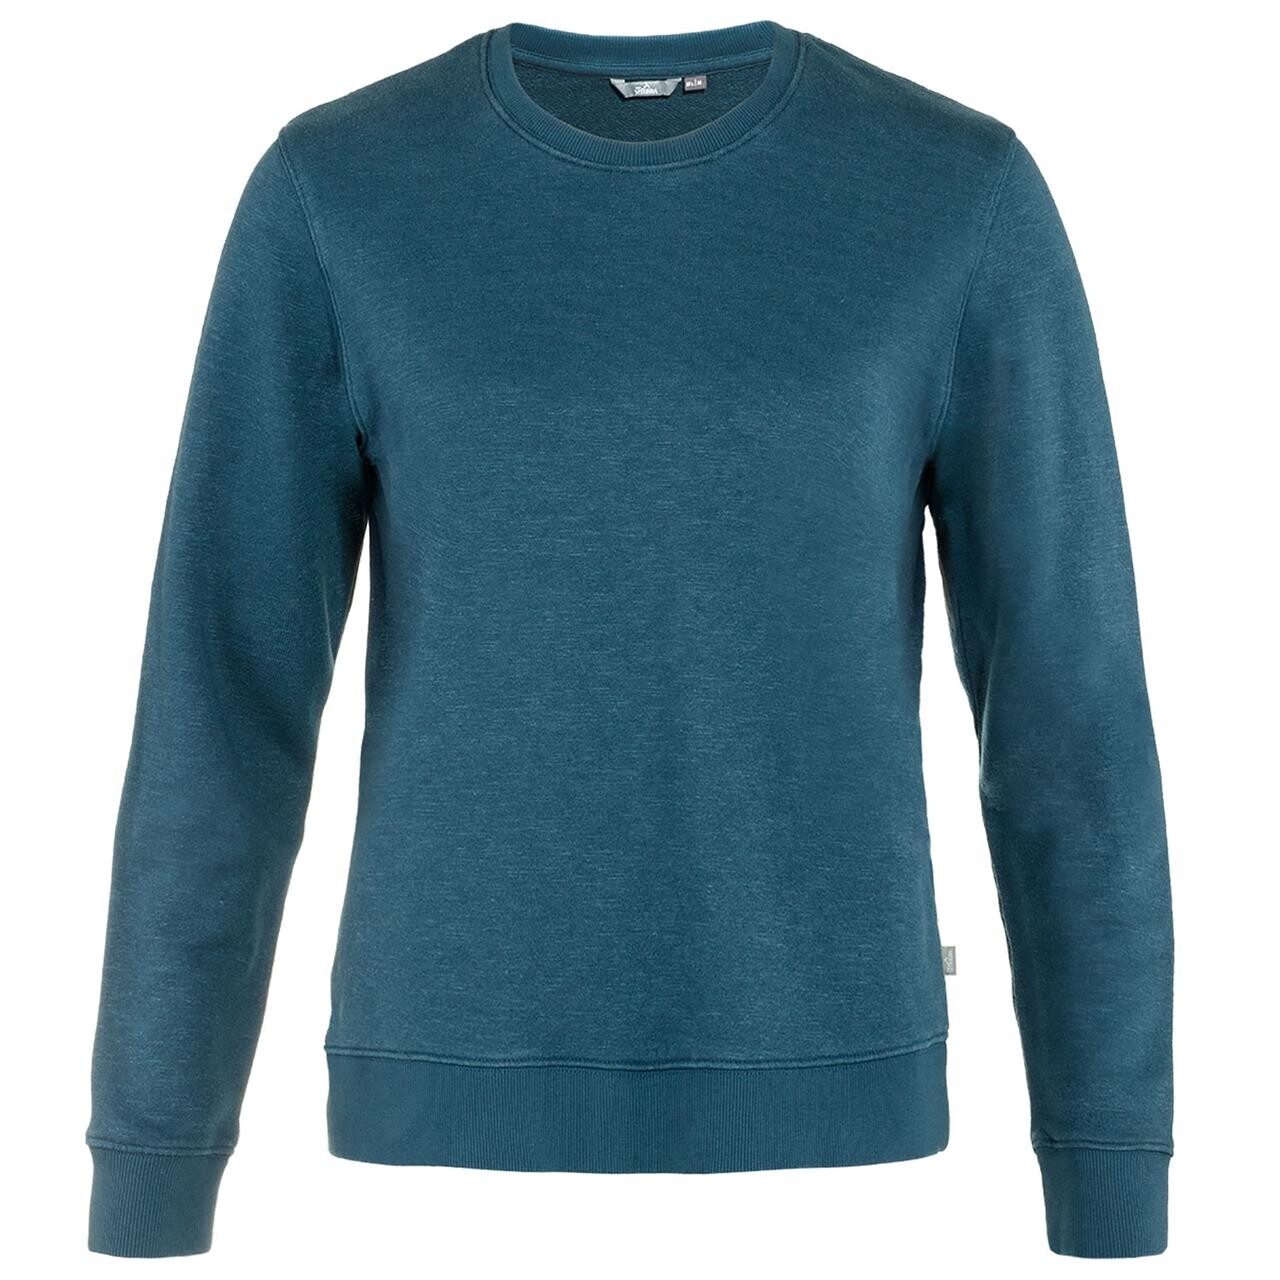 Se Tierra Womens Hempy Sweater (Blå (MAJOLICA BLUE) X-large) hos Friluftsland.dk